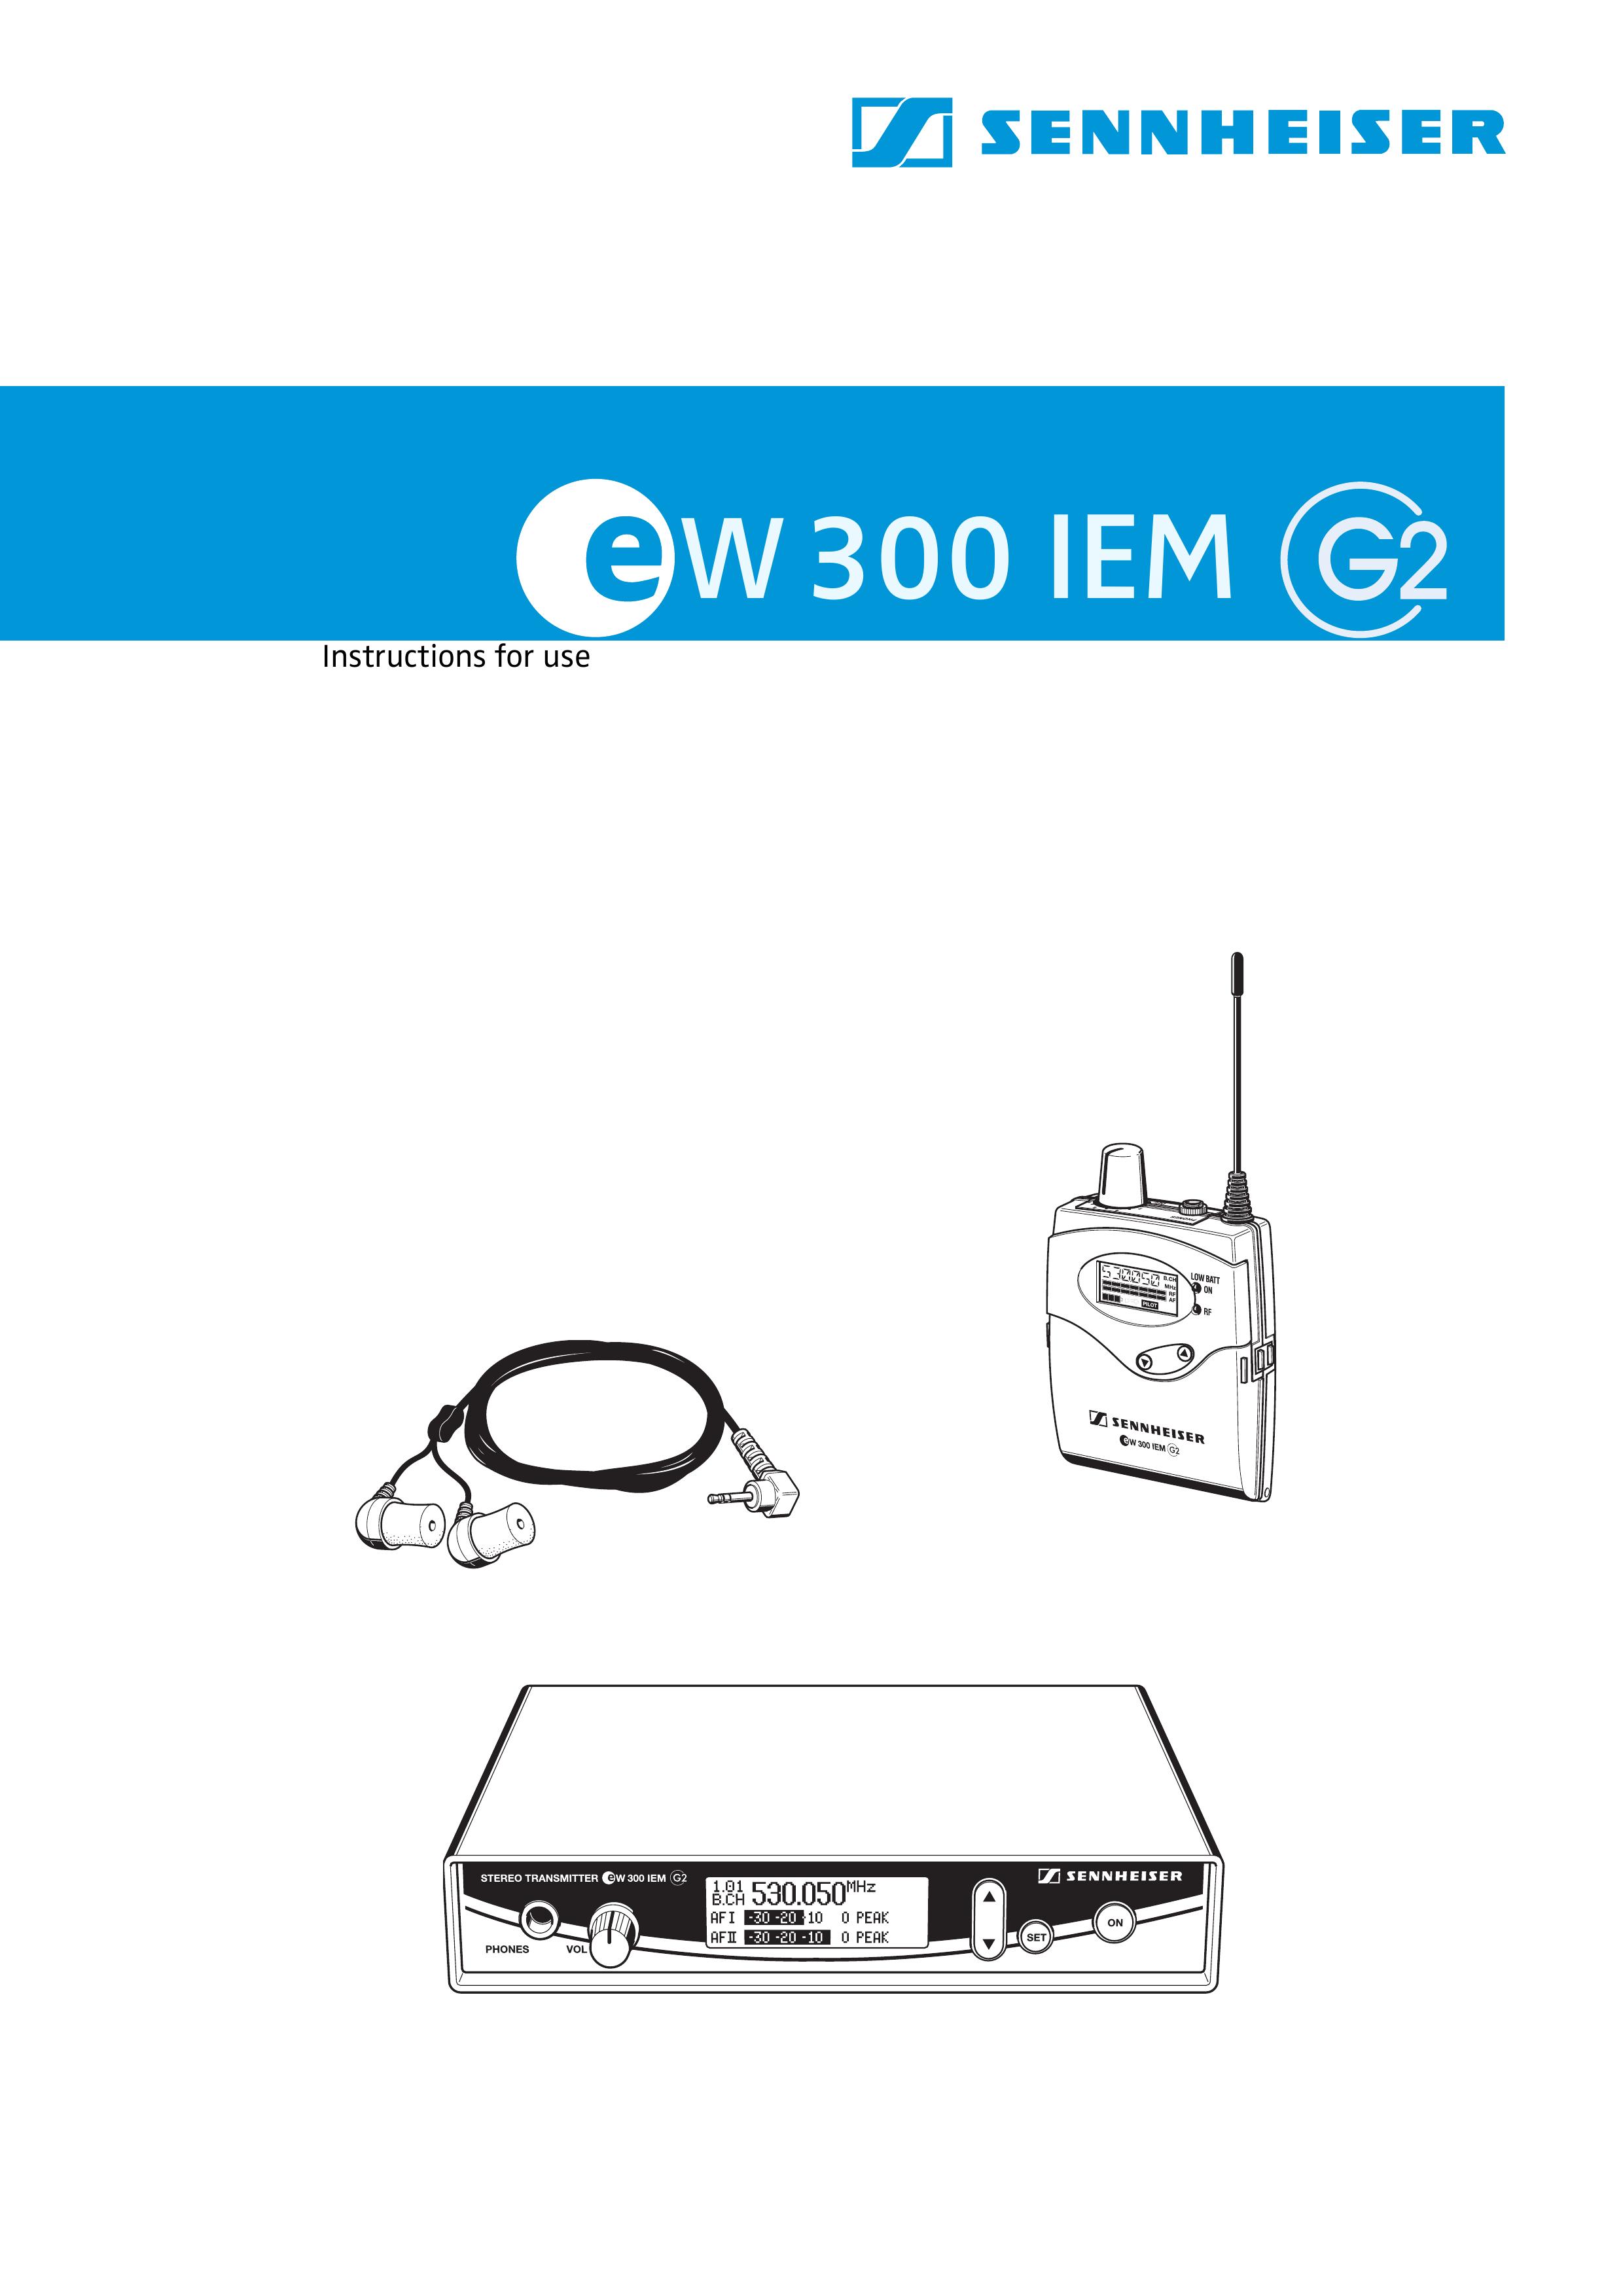 Sennheiser EW 300 IEM G2 Yogurt Maker User Manual